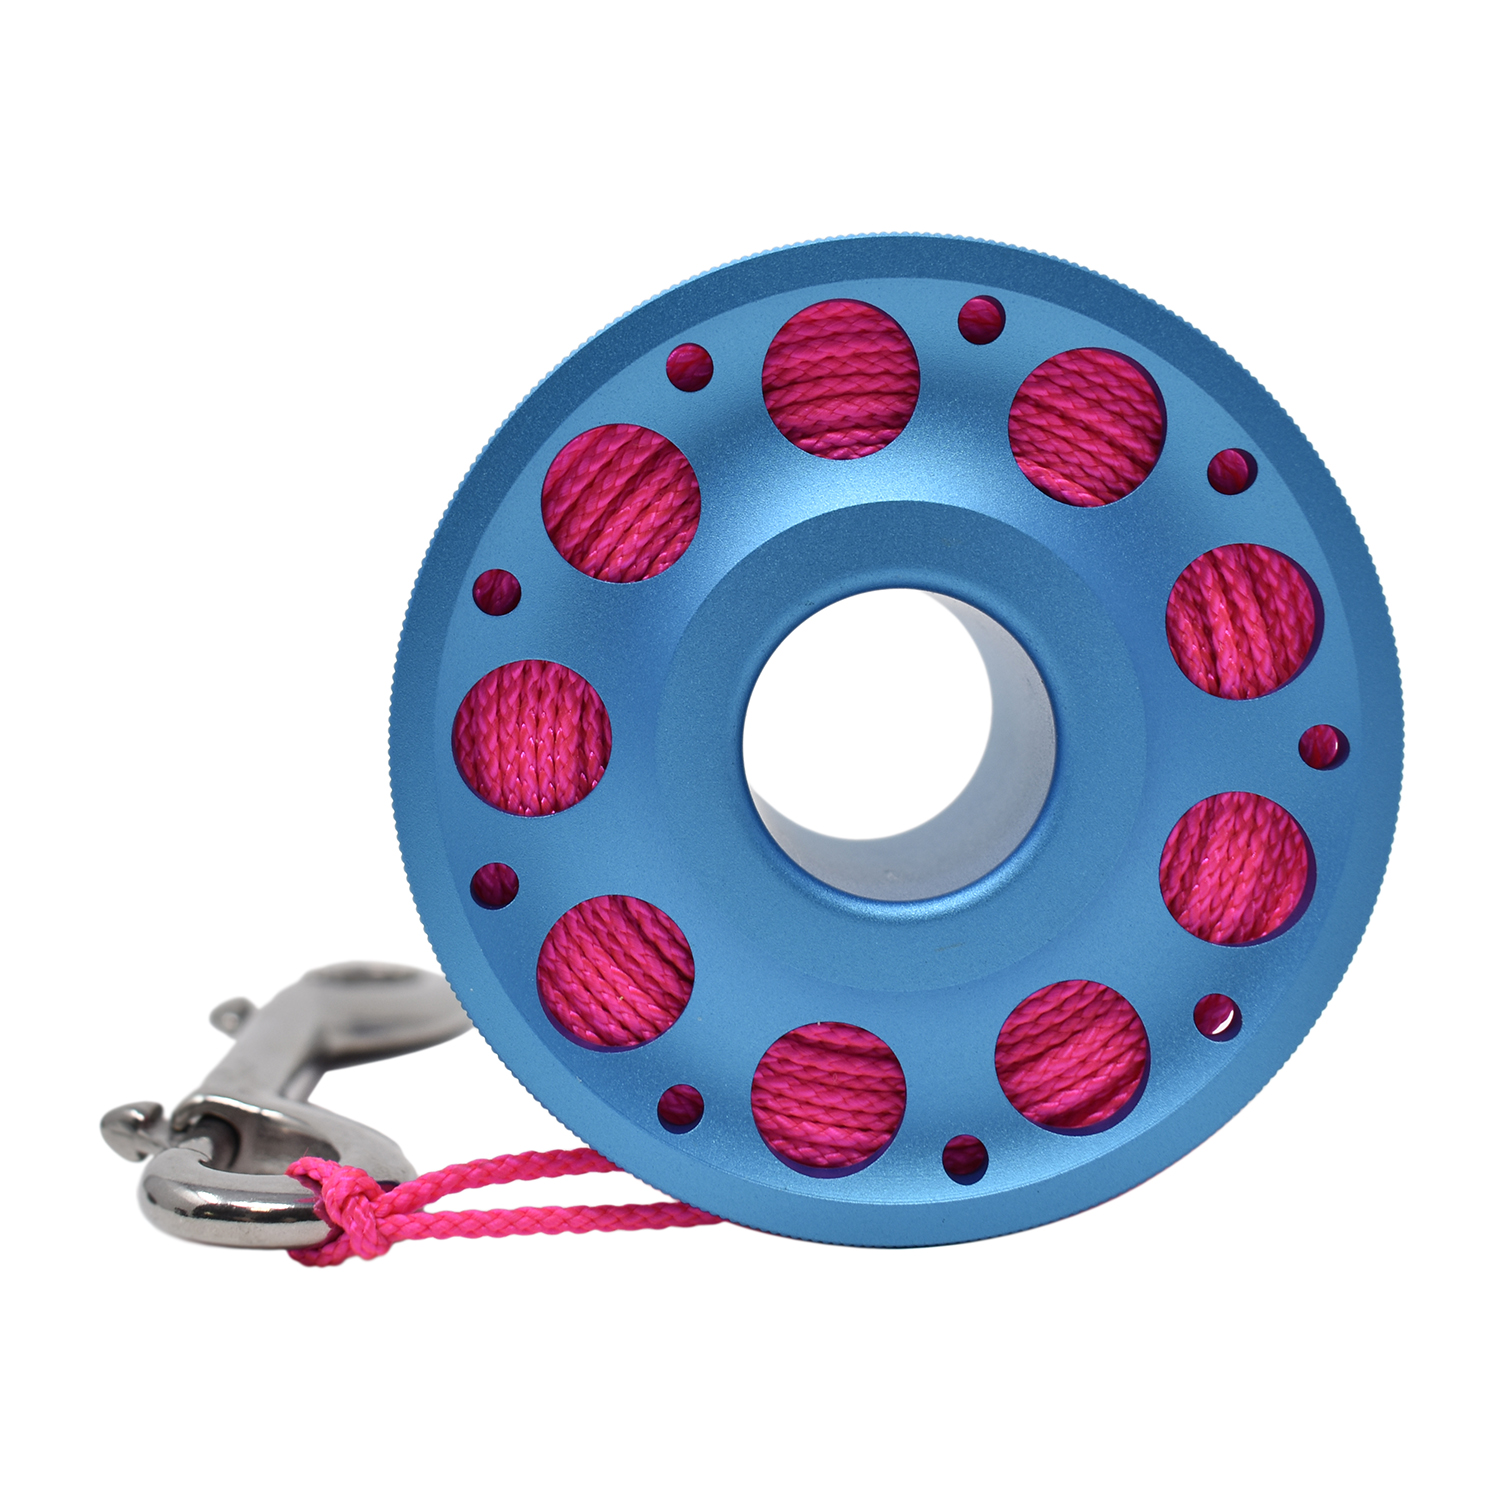 Aluminum Finger Spool 100ft Dive Reel w/ Spinning Holder, Baby Blue/Pink - image 3 of 3